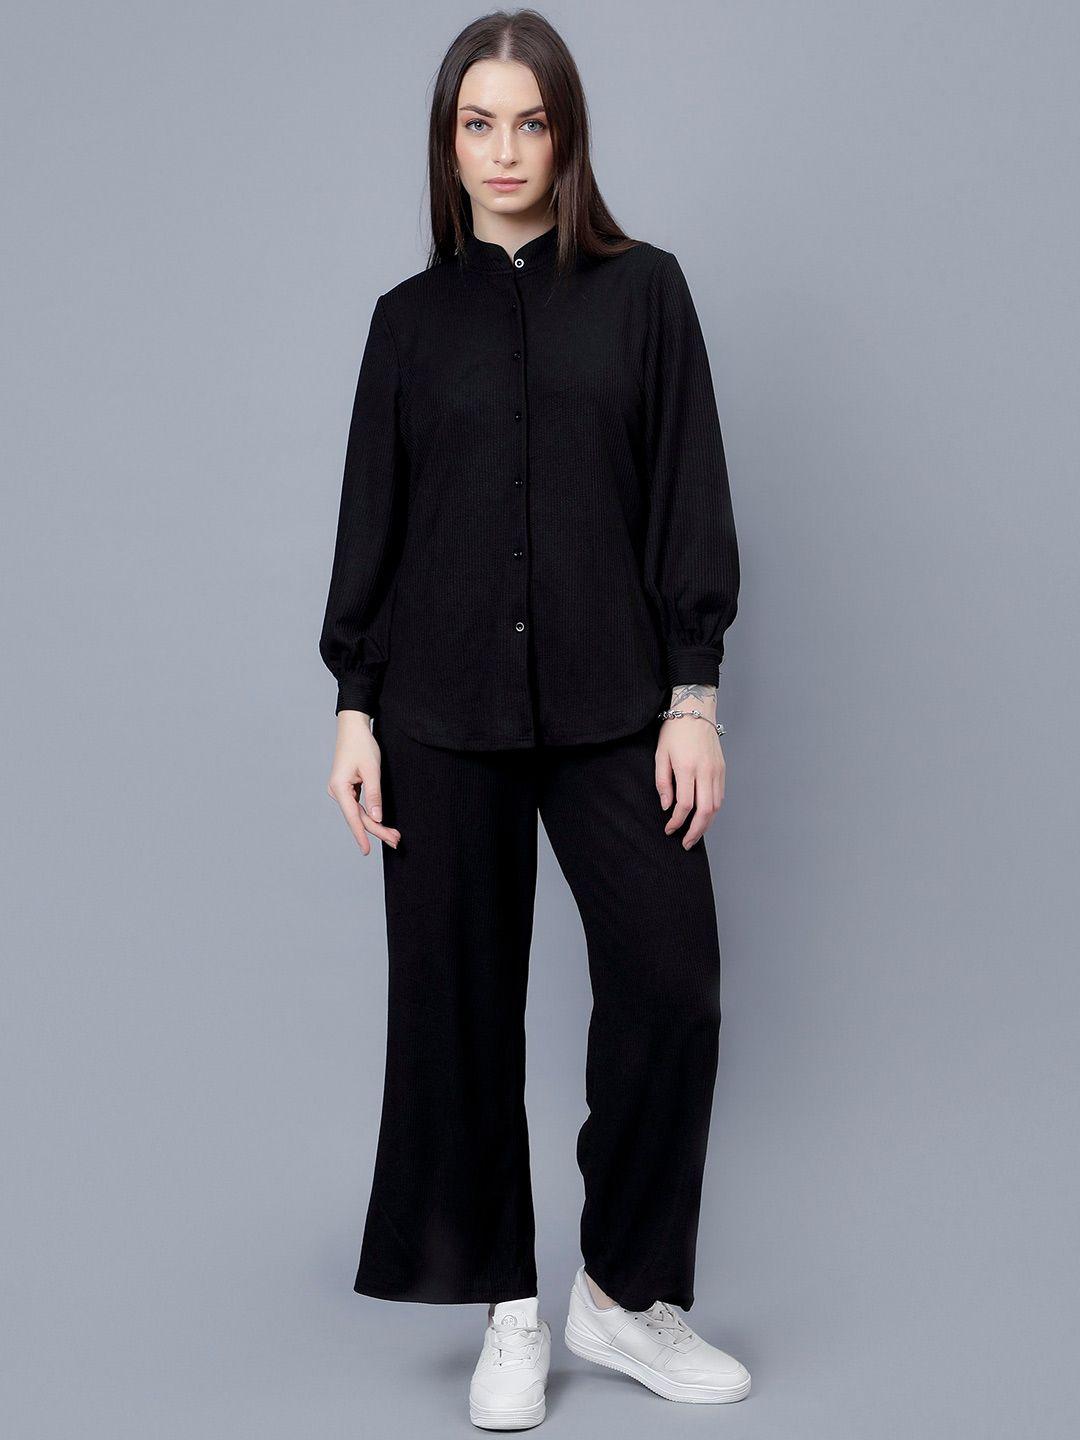 albion black shirt maxi dress